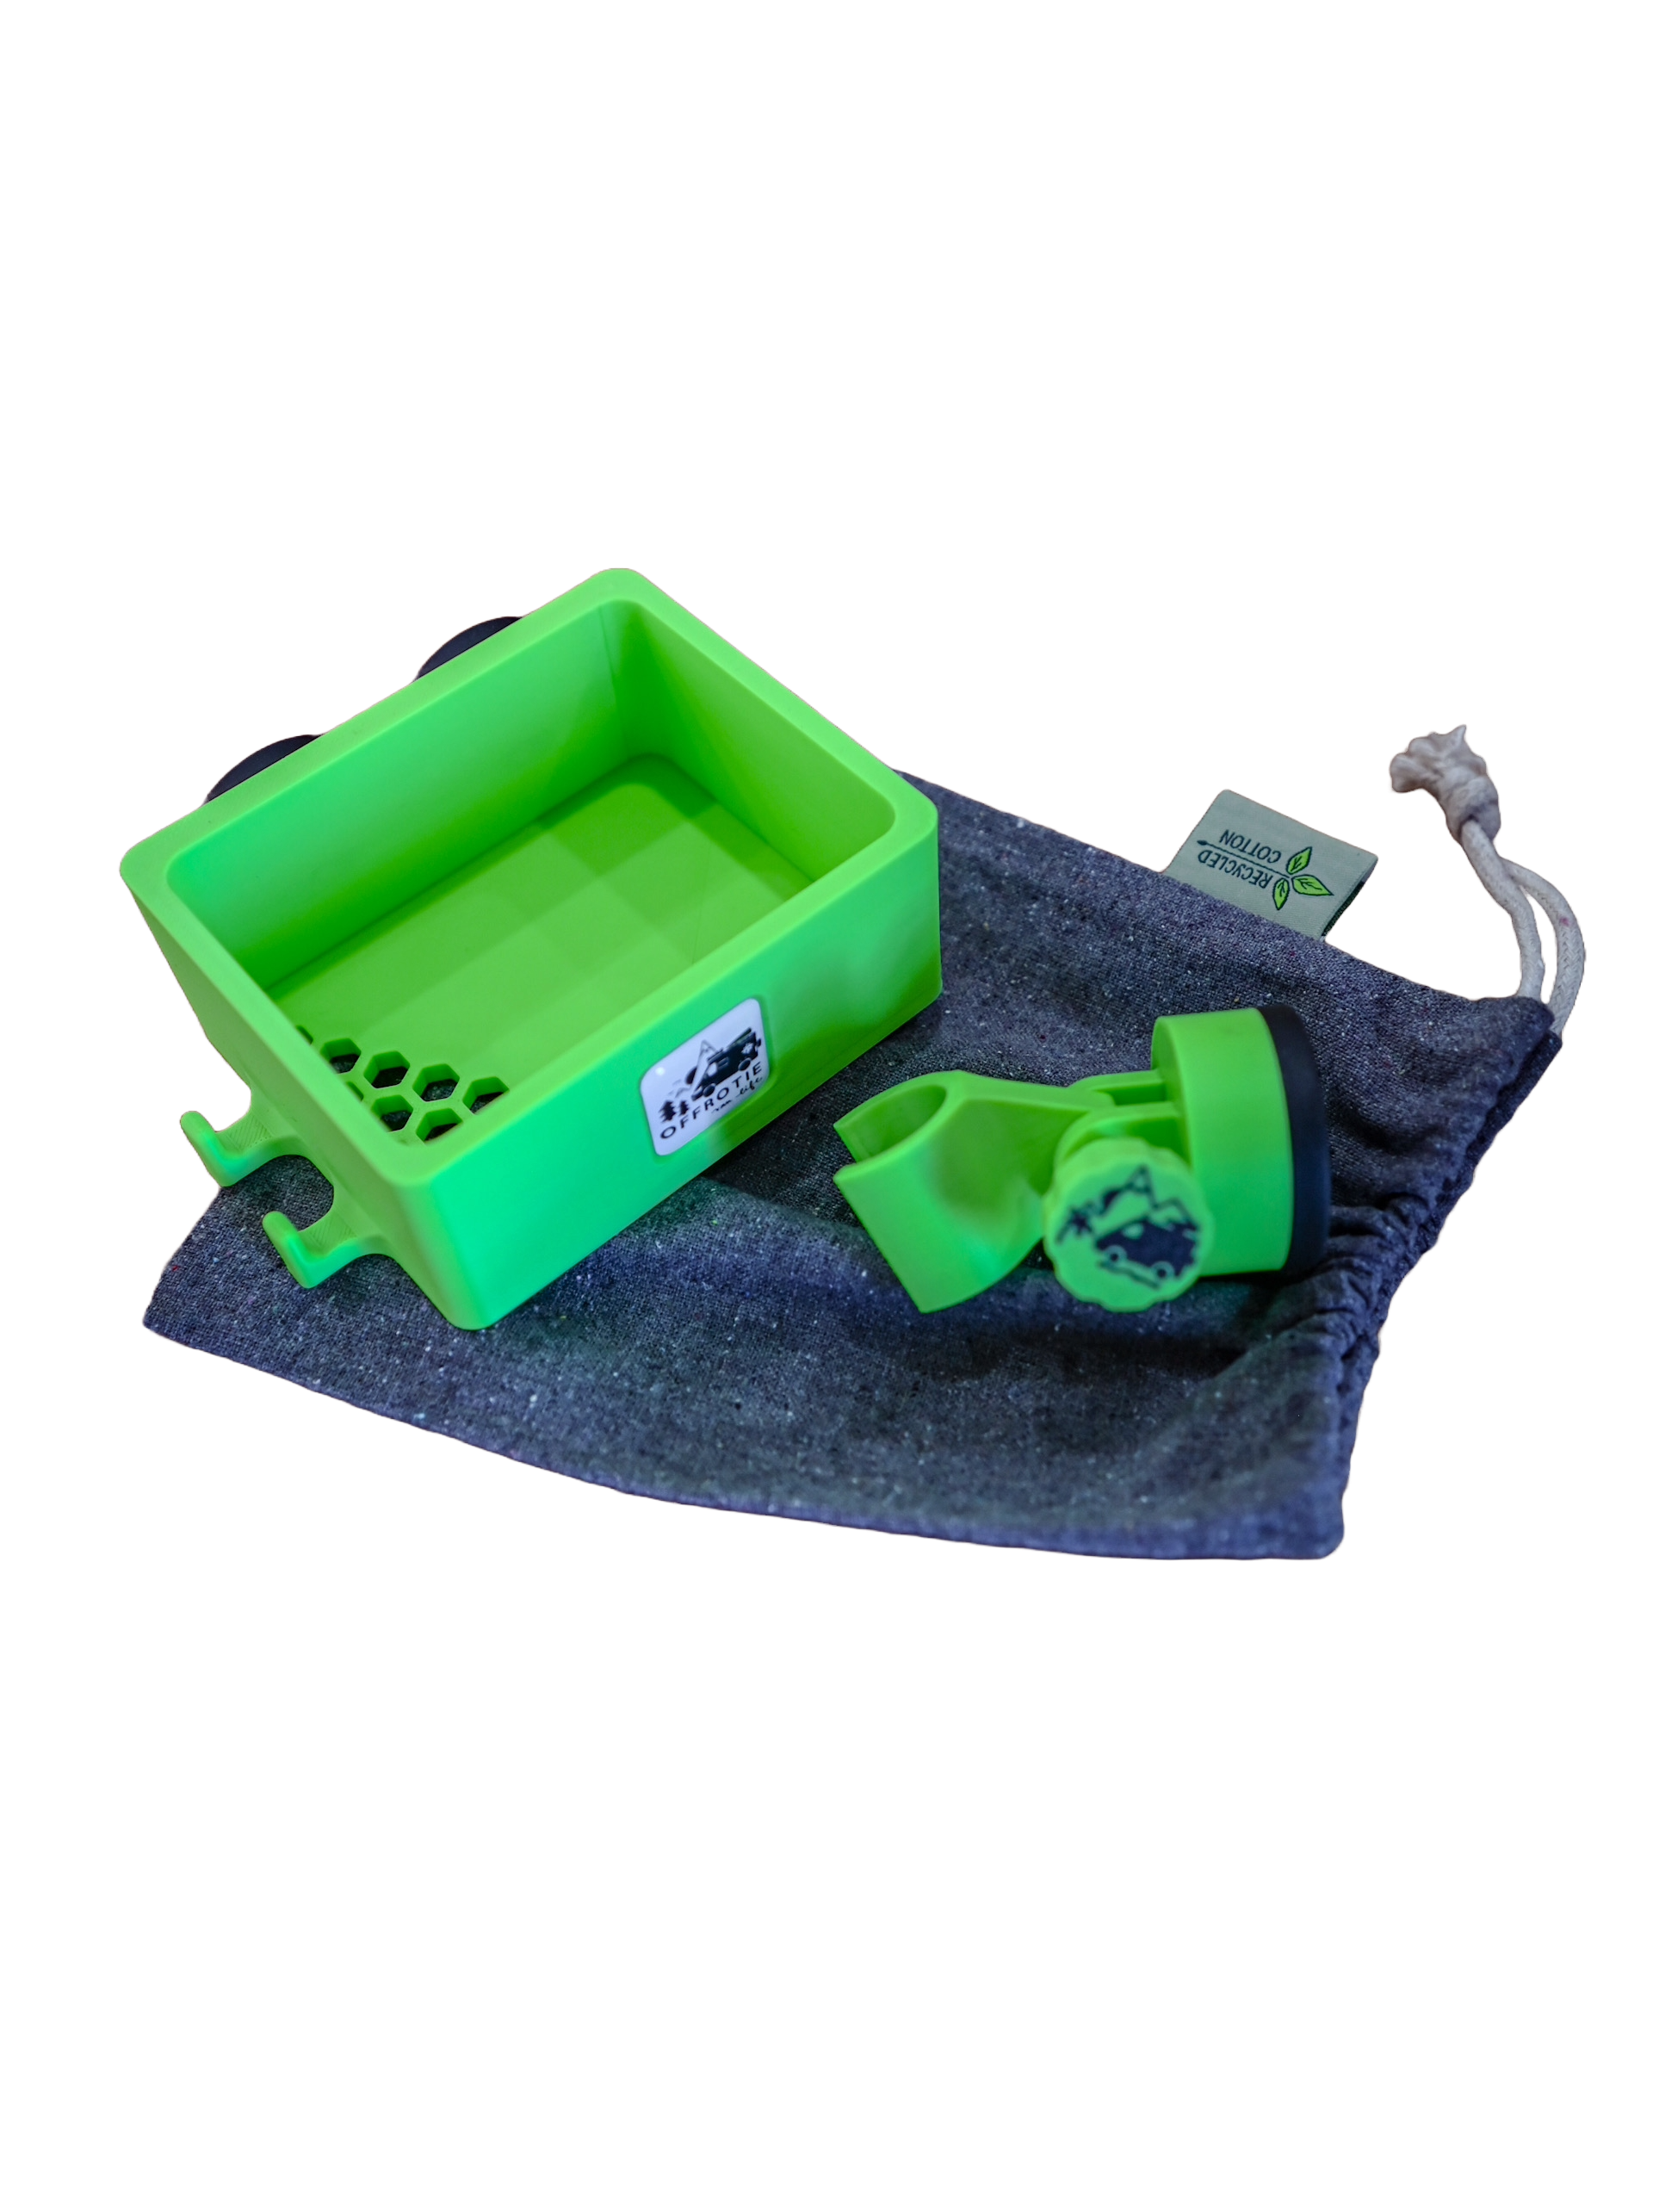 Offrotie 3D Printed Magnetic Shower Holder and Basket Kit – Portable for Vanlife